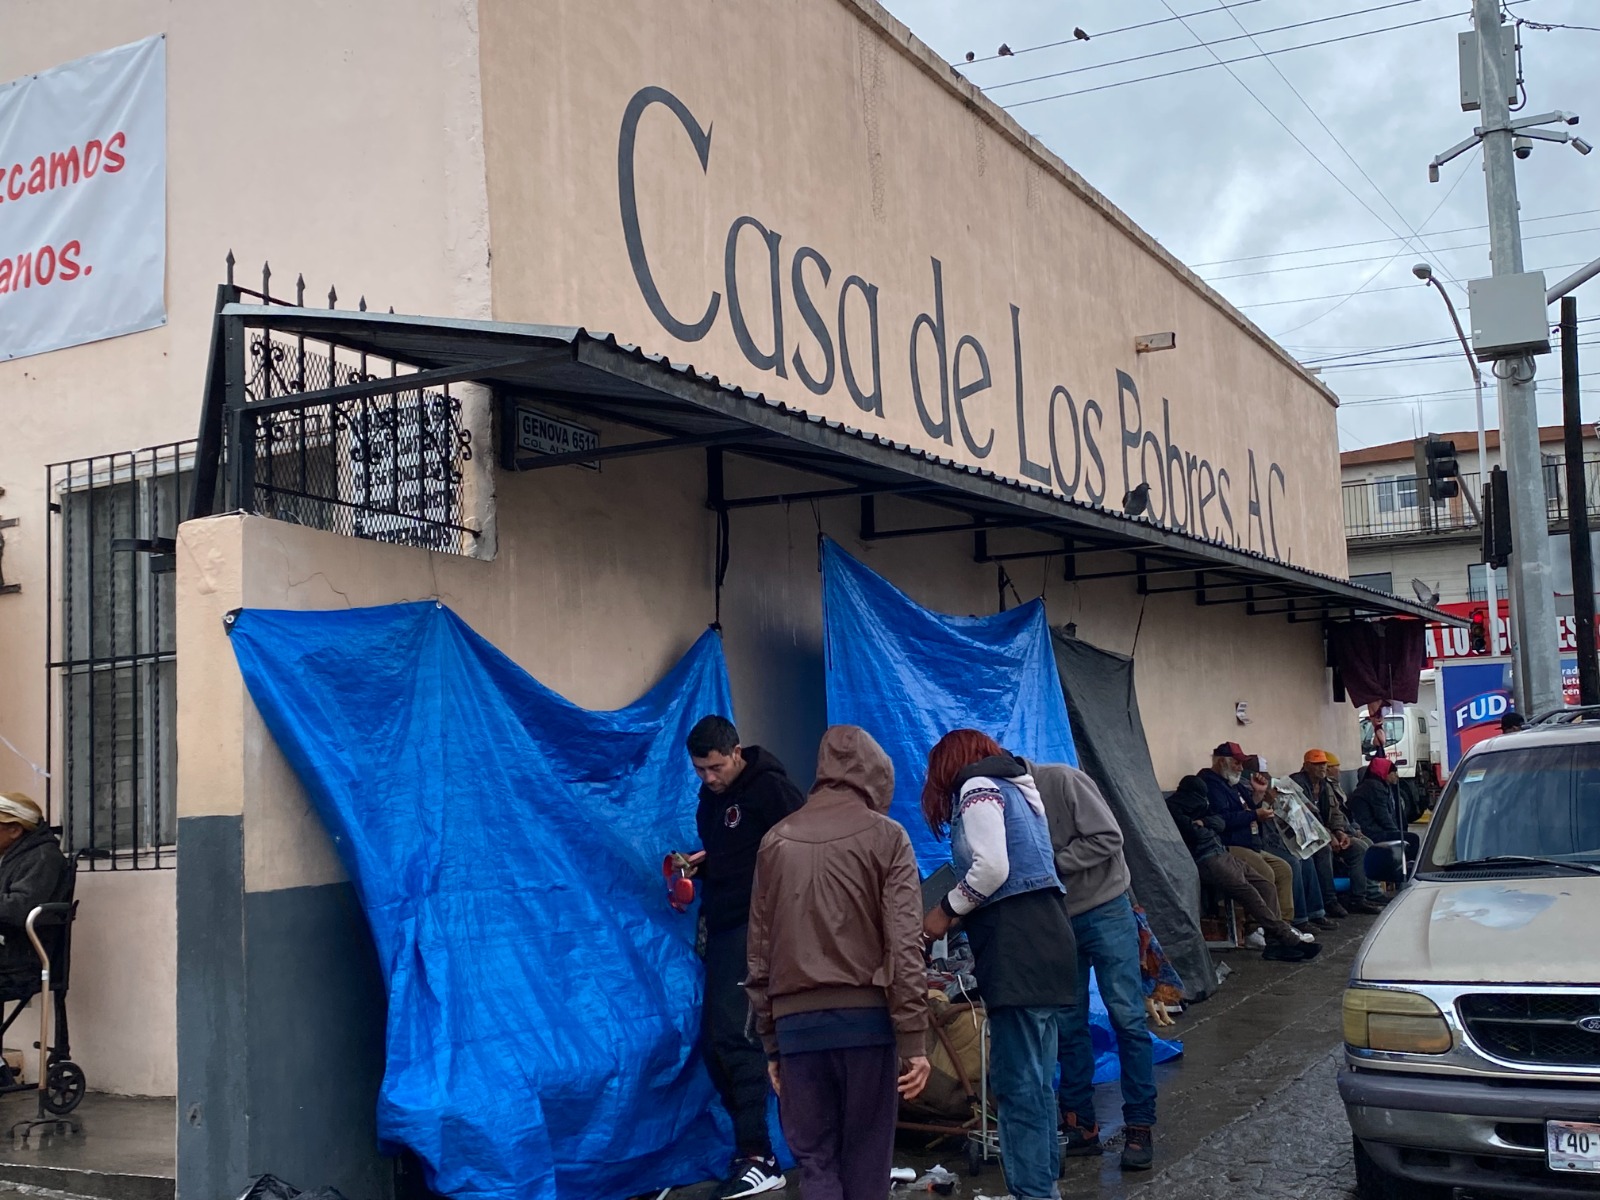 Migrants camp outside the Casa de los Pobres in Tijuana, Mexico. (Courtesy of Clara Malo)